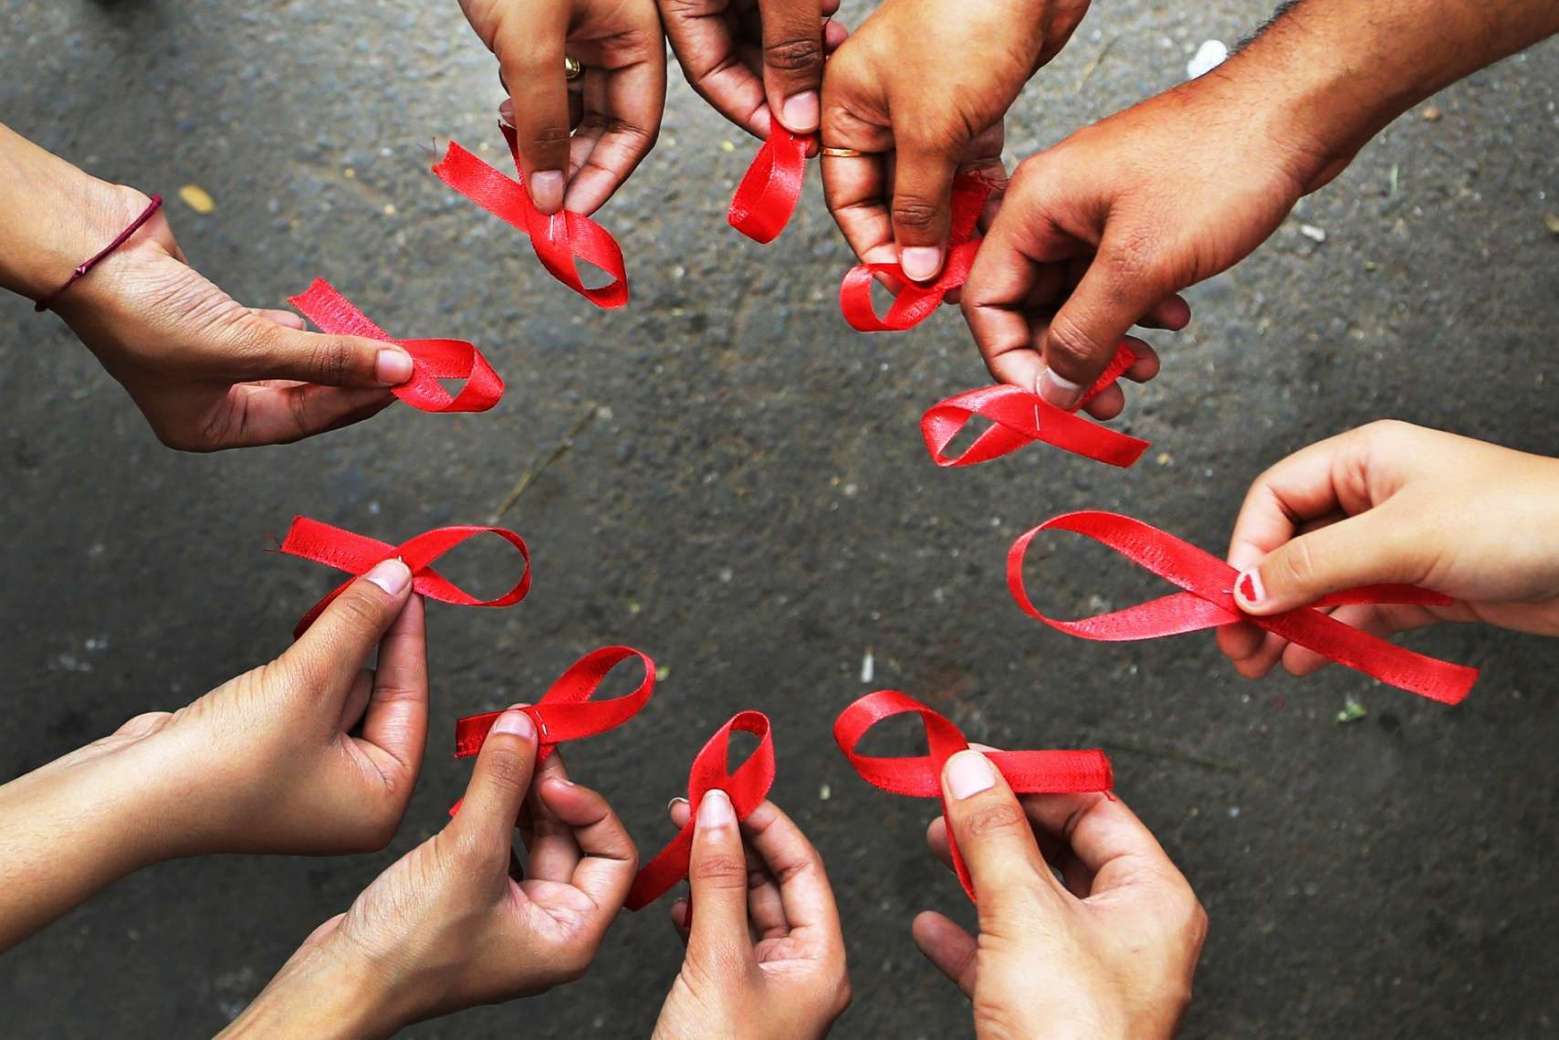 Se incrementan los casos de VIH/sida en América Latina, creció un 7%